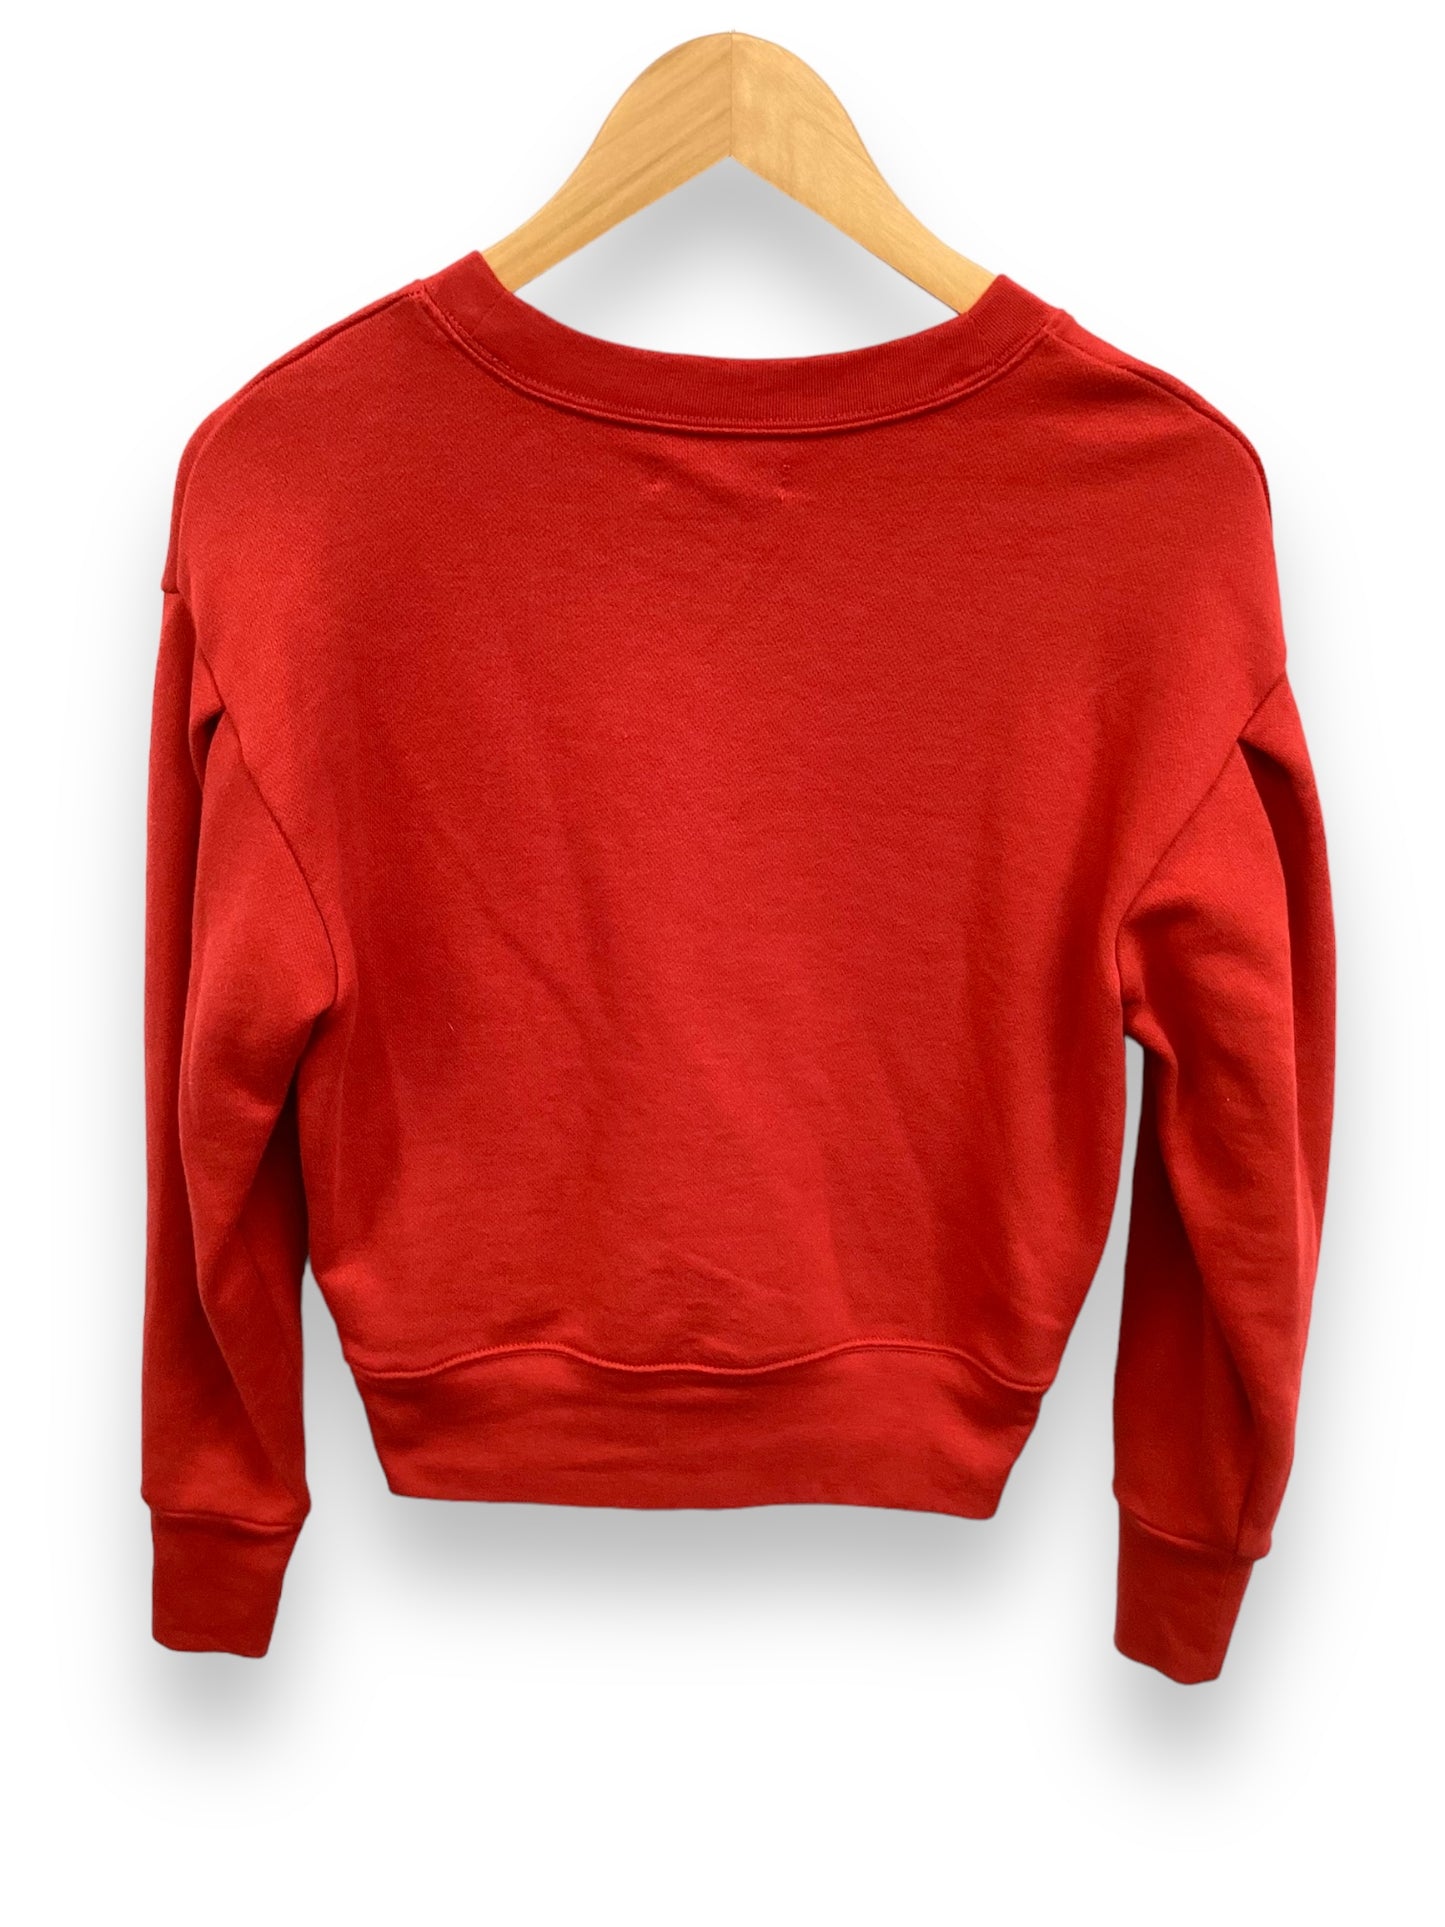 Sweatshirt Crewneck By Madewell  Size: Xs